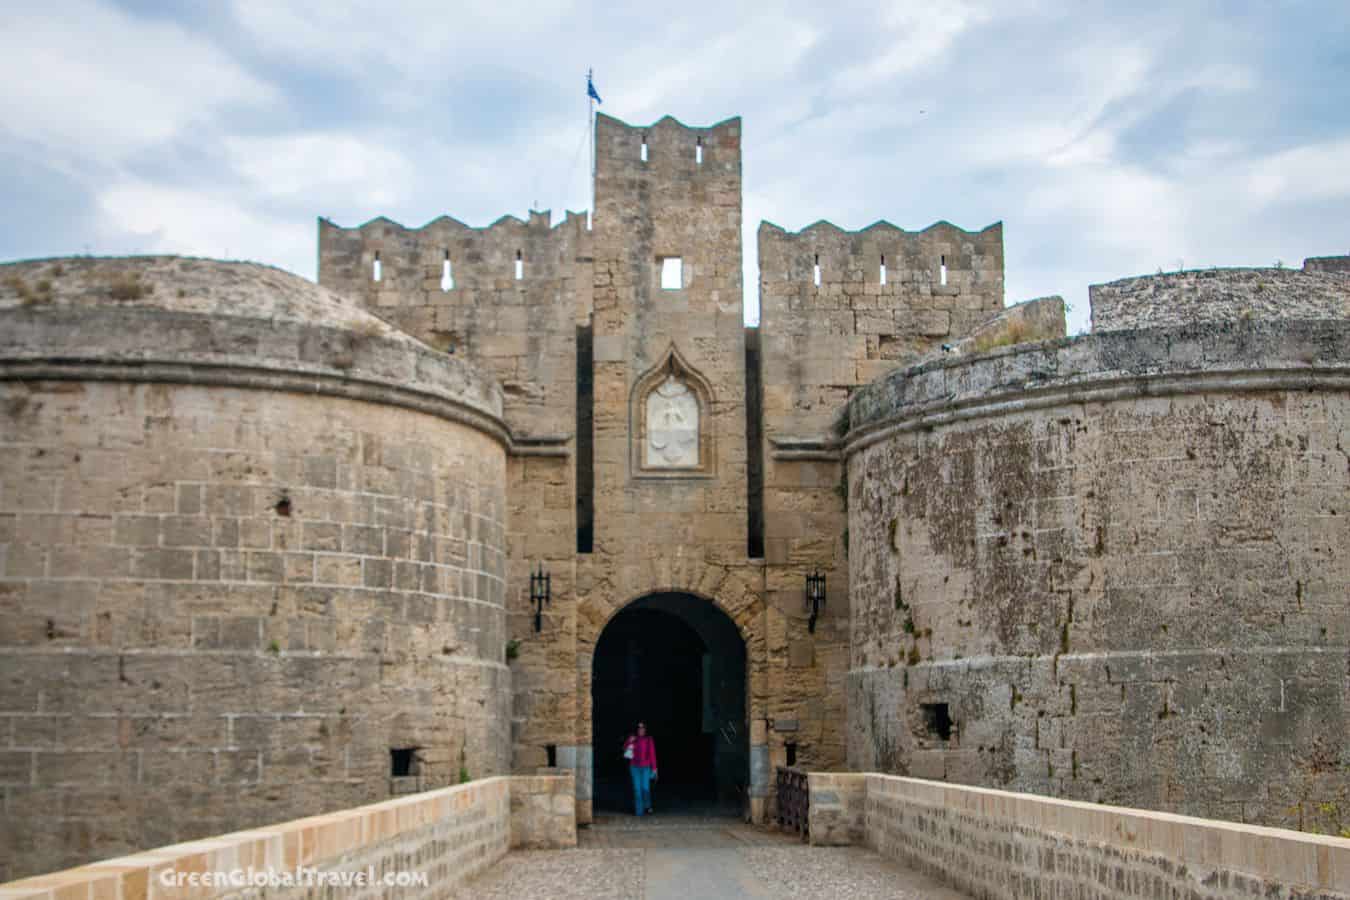 Gate d'Amboise in Rhodes, Greece